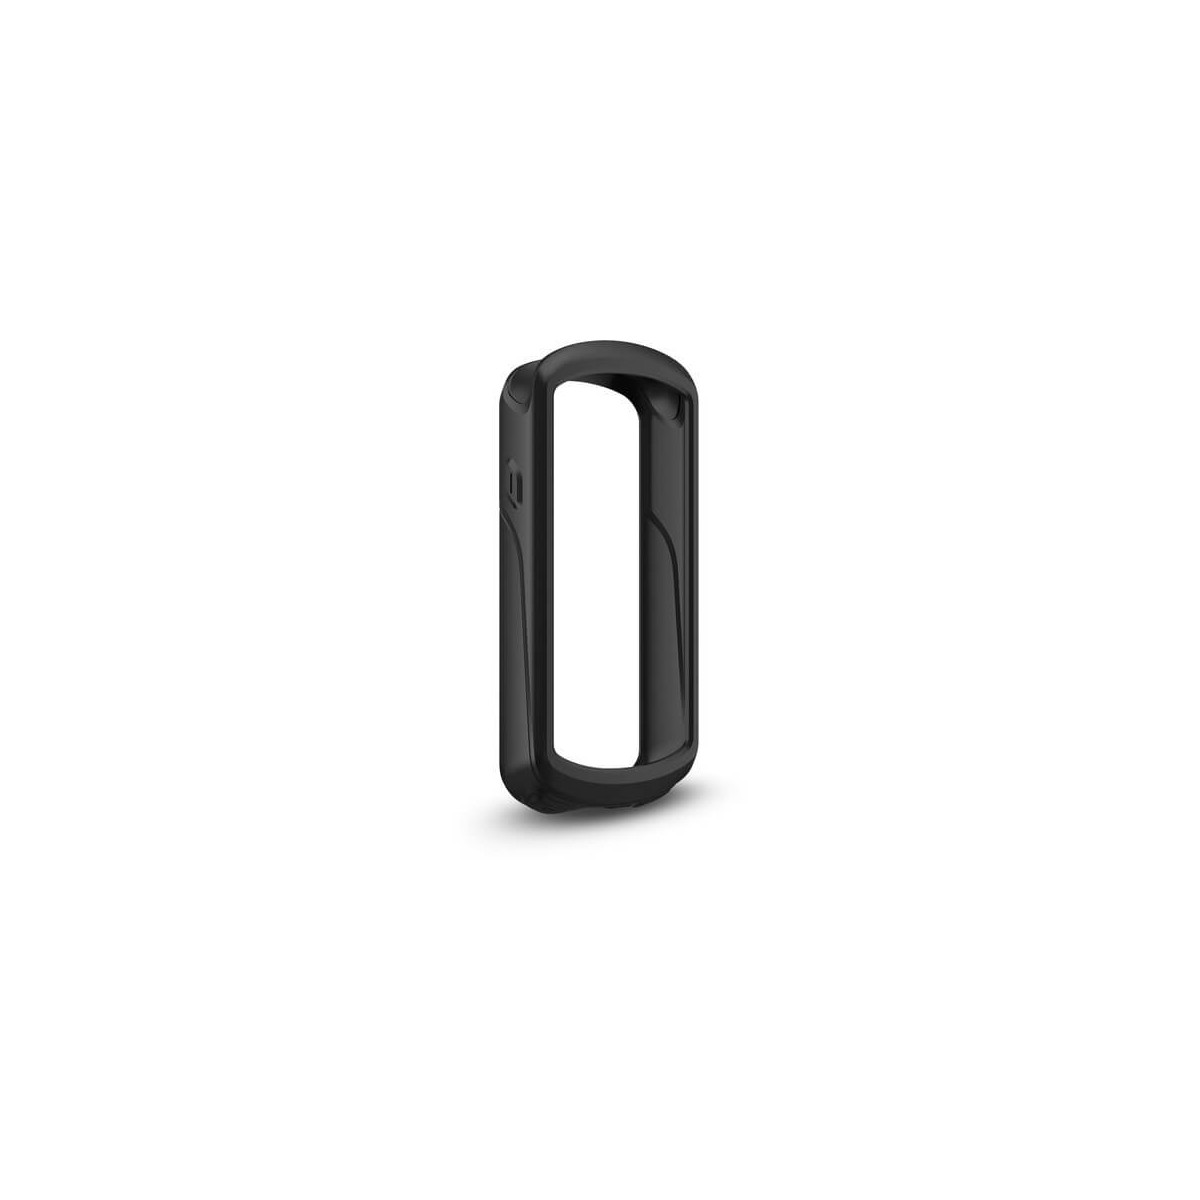 Garmin Edge 1030 black silicone case